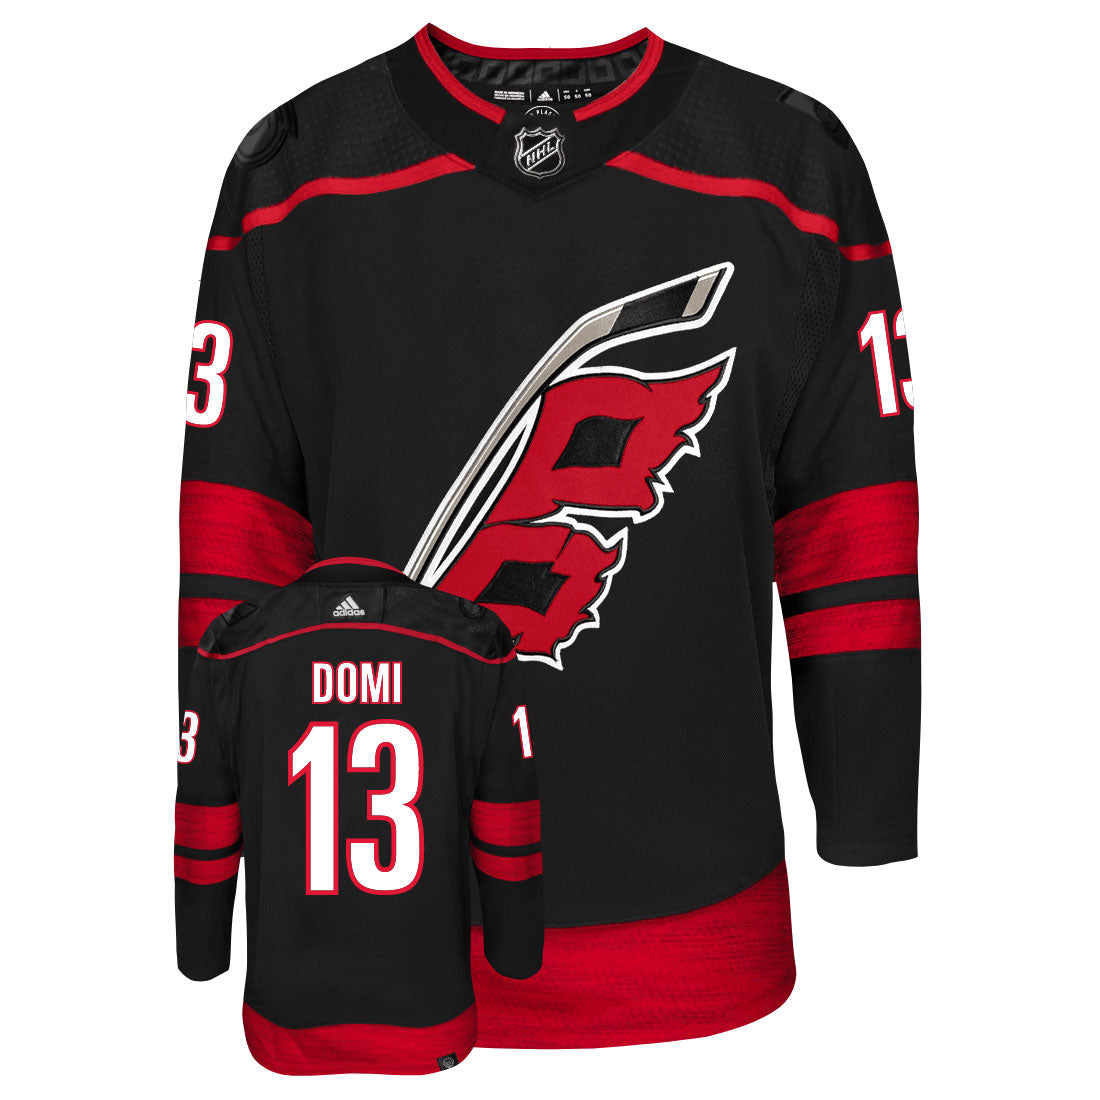 Max Domi Carolina Hurricanes Adidas Primegreen Authentic Third Alternate NHL Hockey Jersey - Front/Back View